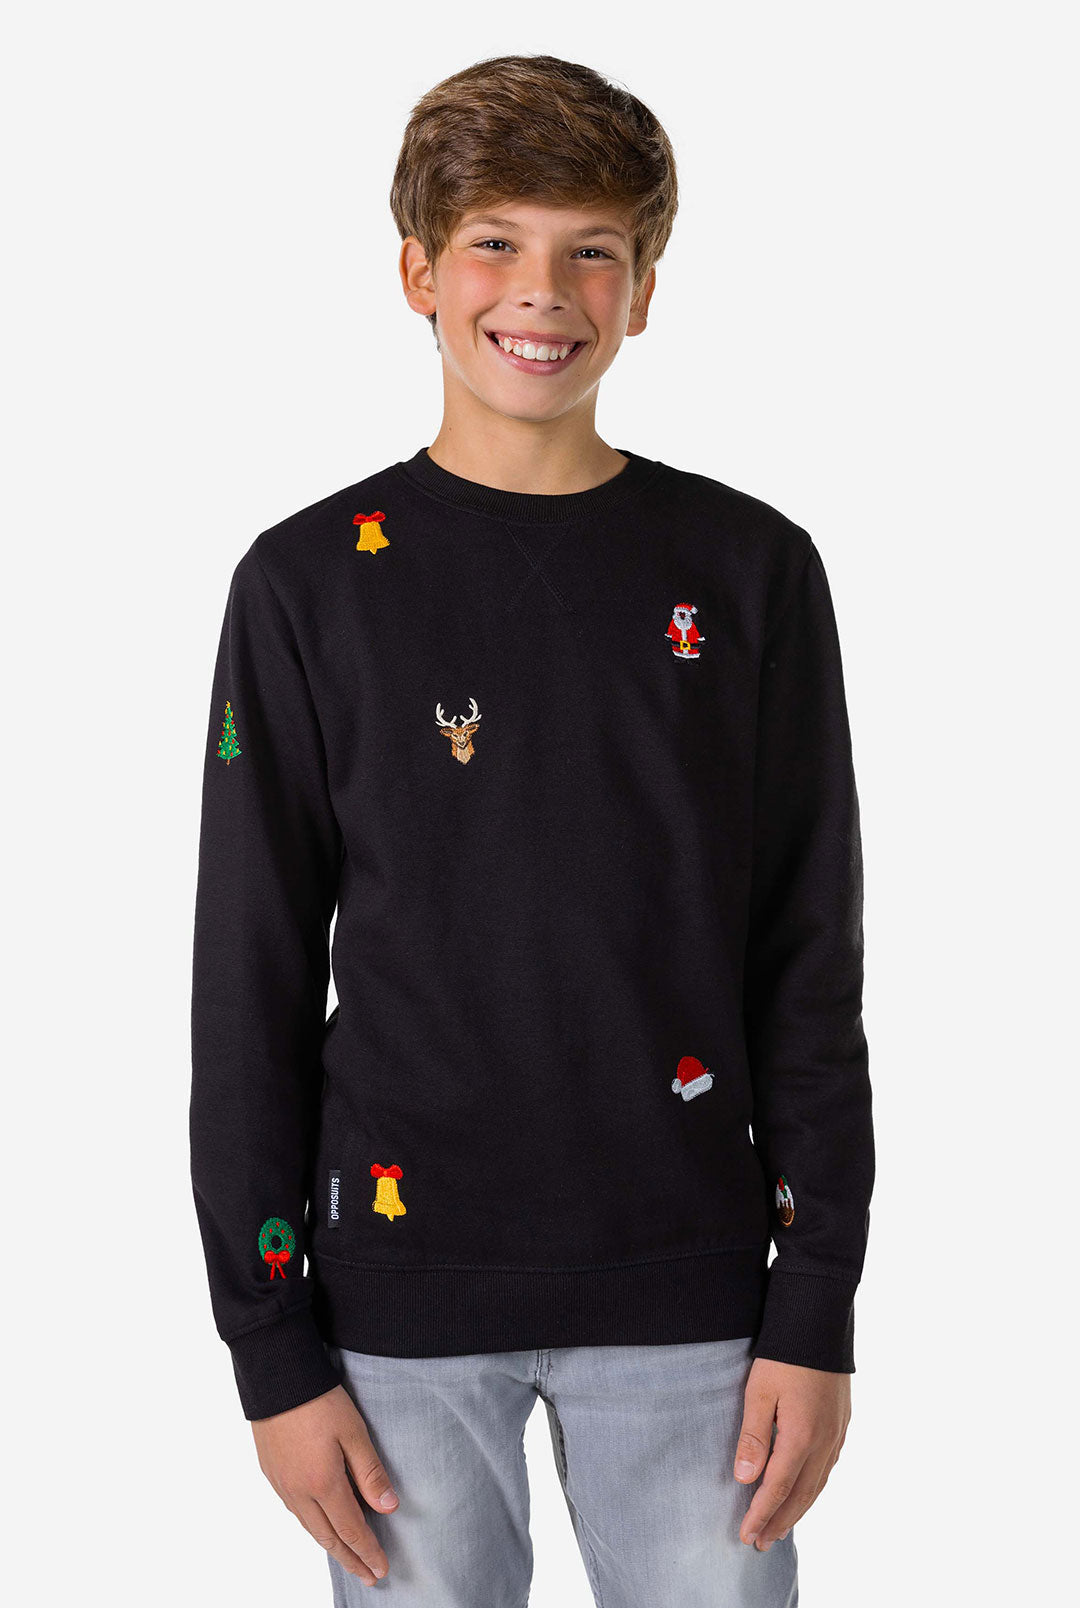 X-Mas Icons Black Teen Boys Sweater - OppoSuits Deluxe